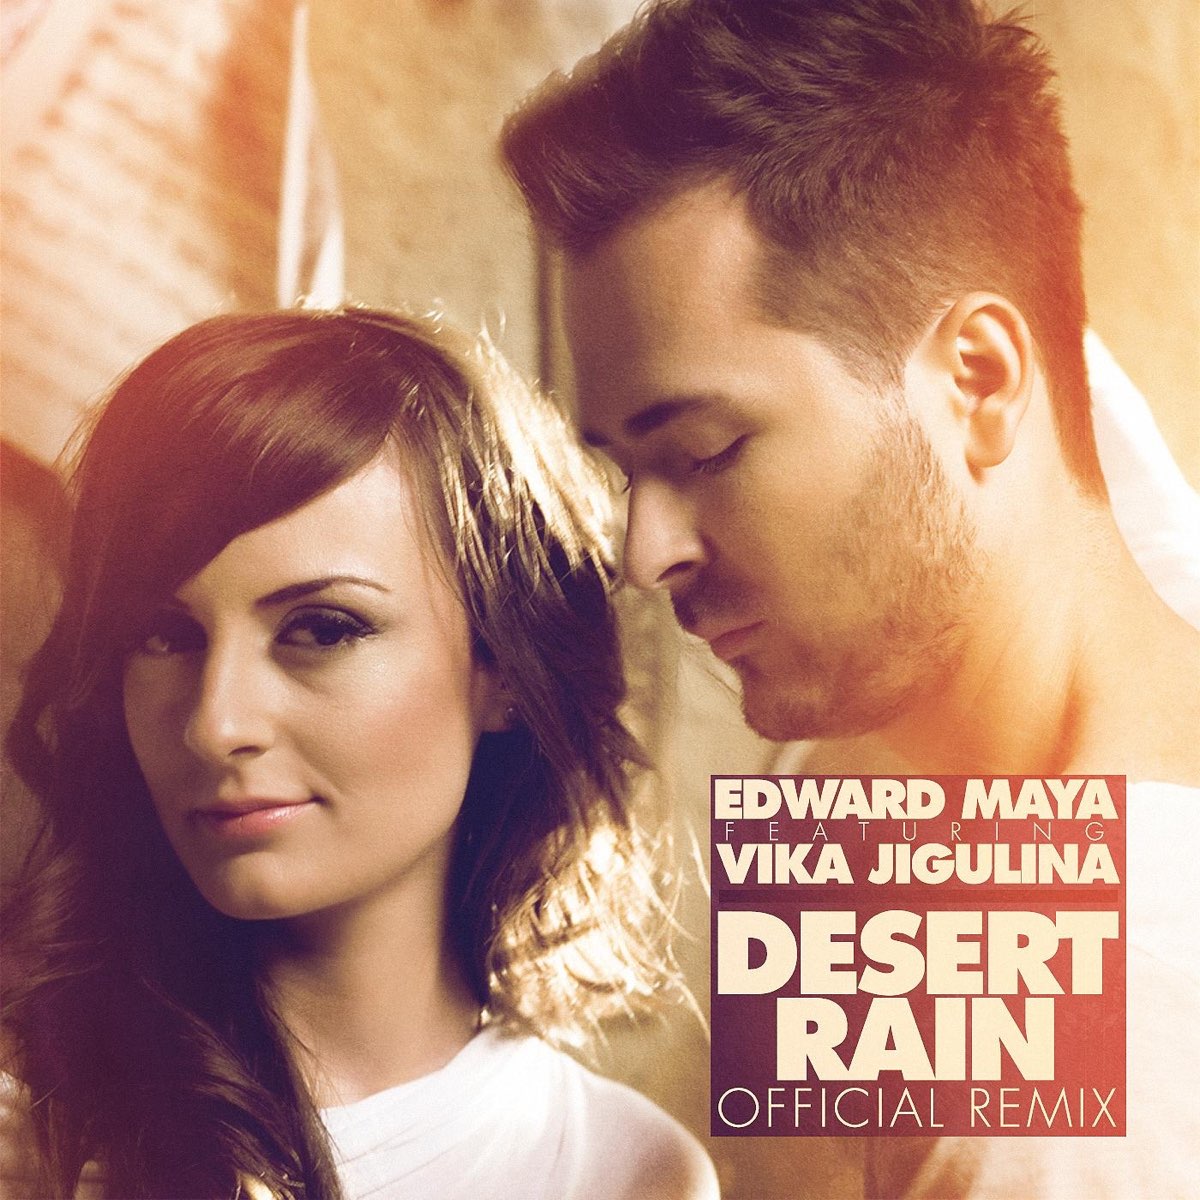 Stereo love edward remix. Desert Rain Вика Жигулина. Edward Maya Desert Rain album.